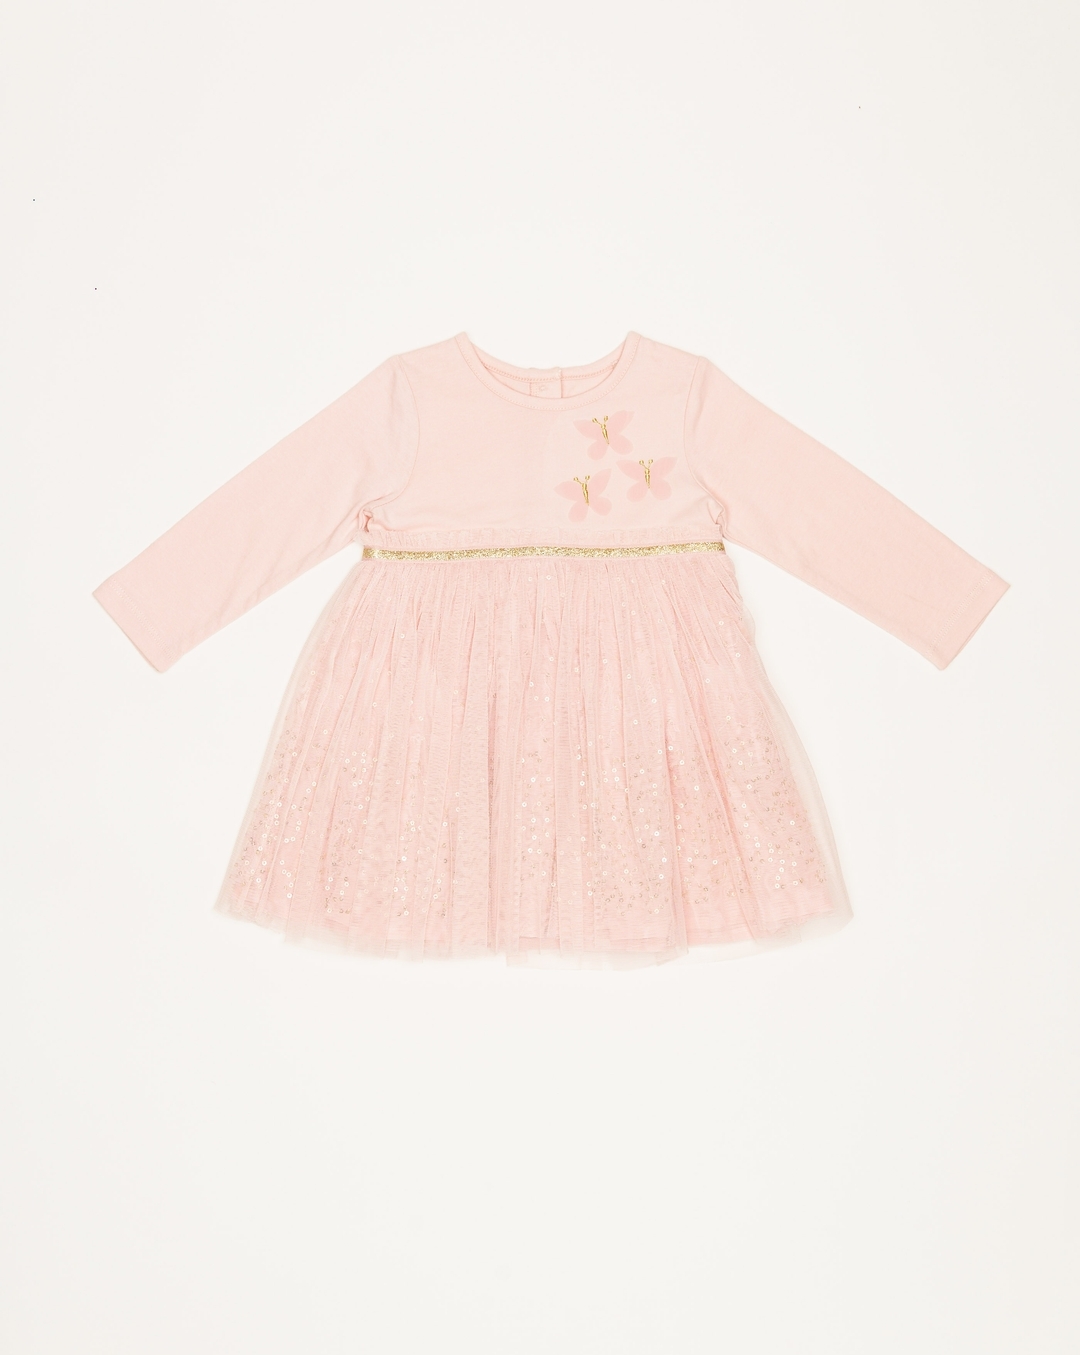 Adorable Little Baby Girl Pink Dress Stock Photo 127153586 | Shutterstock